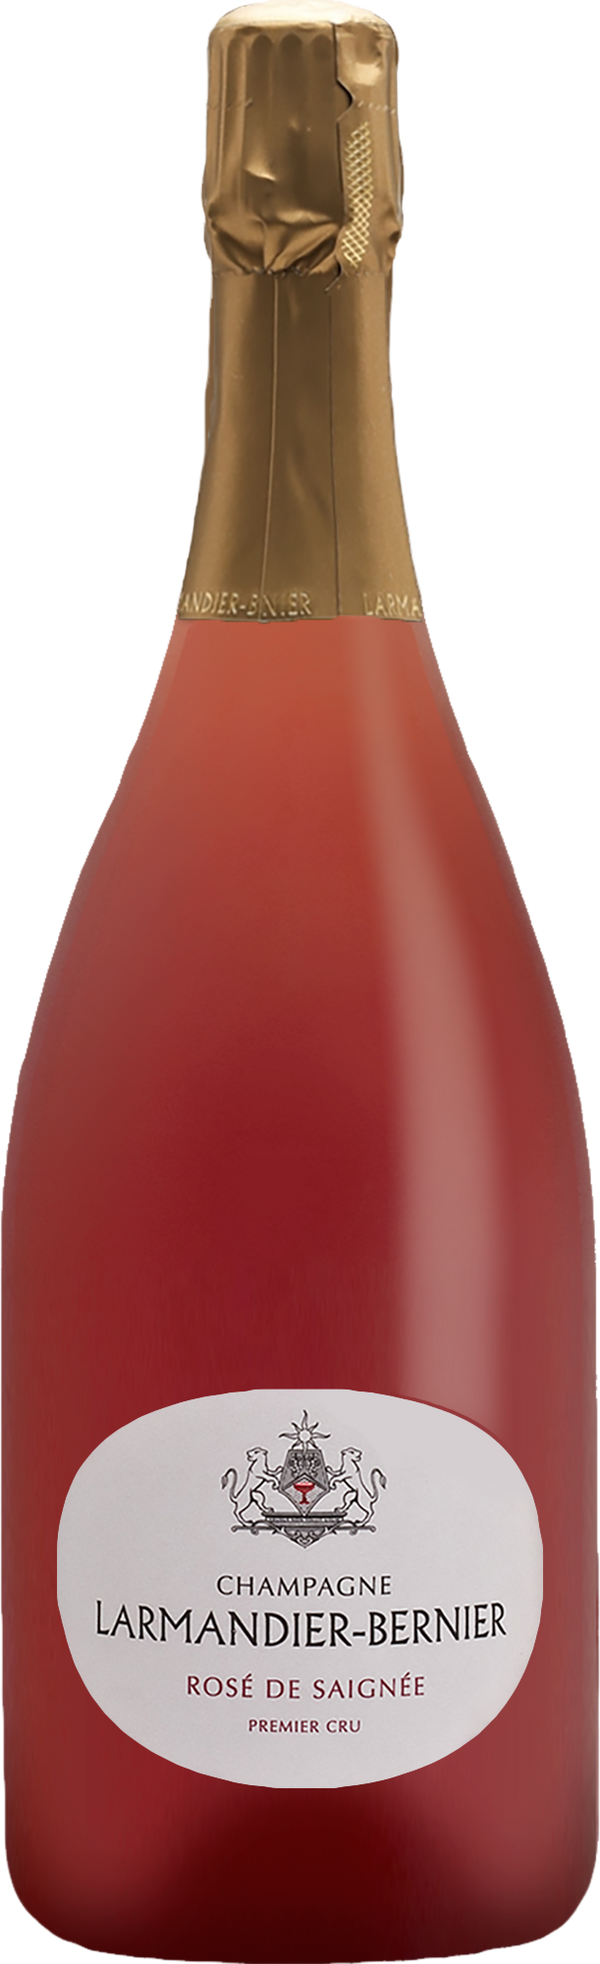 Champagne Larmandier-Bernier 1er Cru Rosé de Saignée NV (Base 19. Disg. Mar 2022) (1500ml)